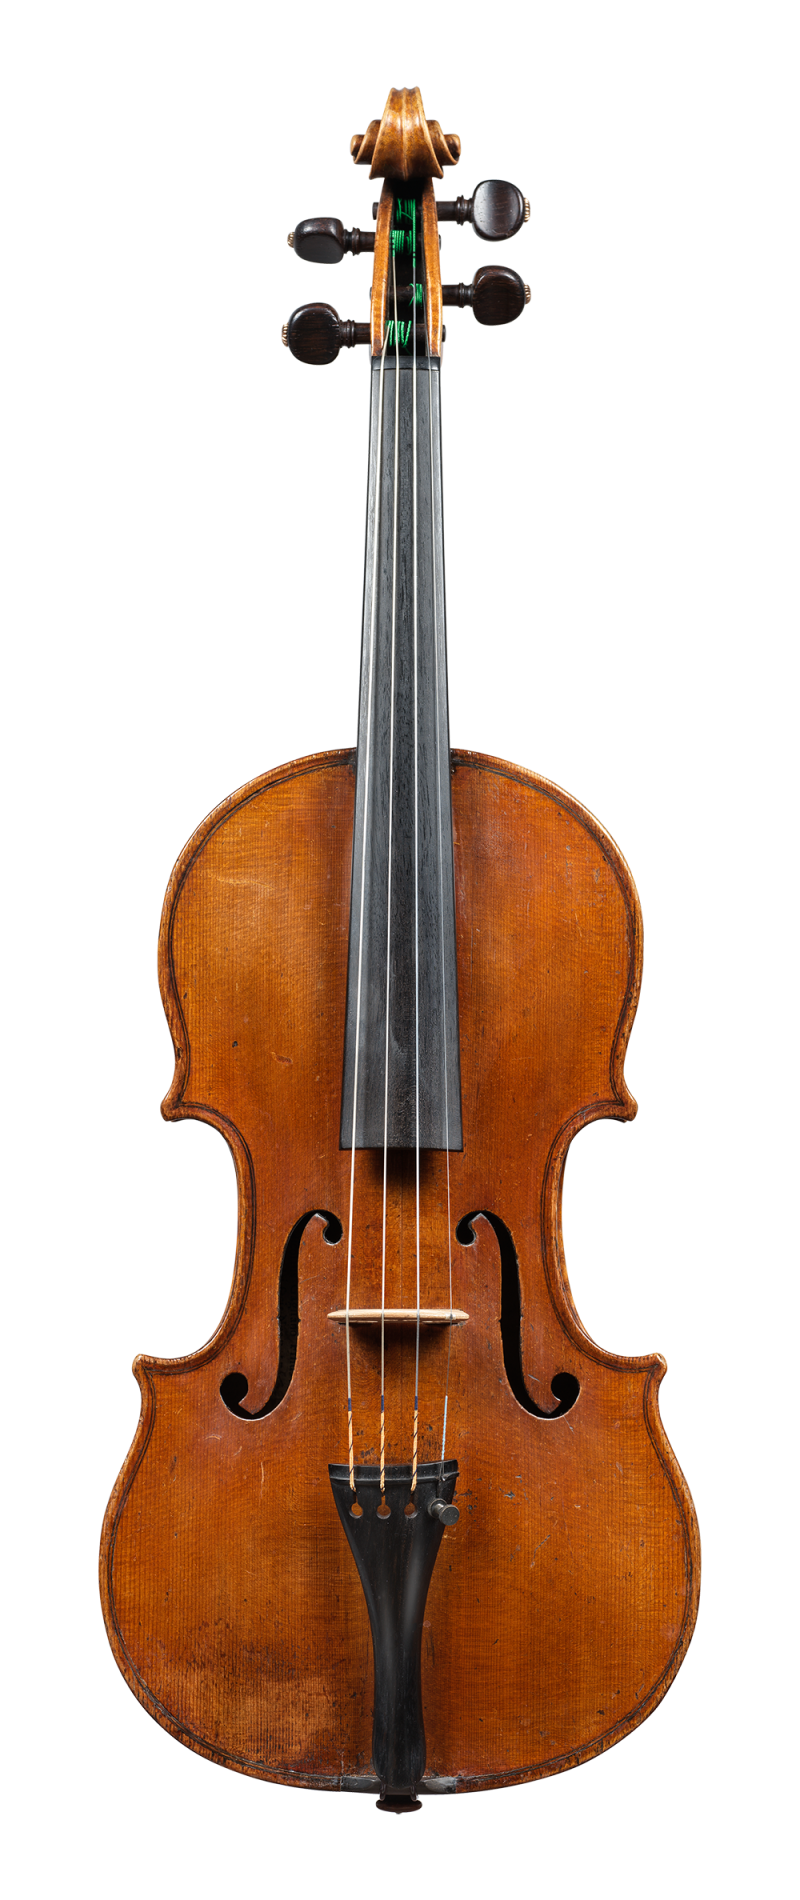 A violin by Nicola Gagliano, Naples, 1780